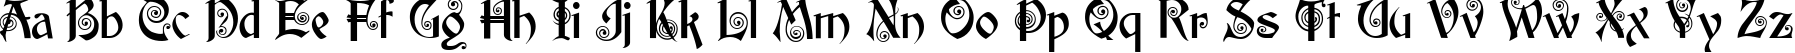 Пример написания английского алфавита шрифтом Edisson